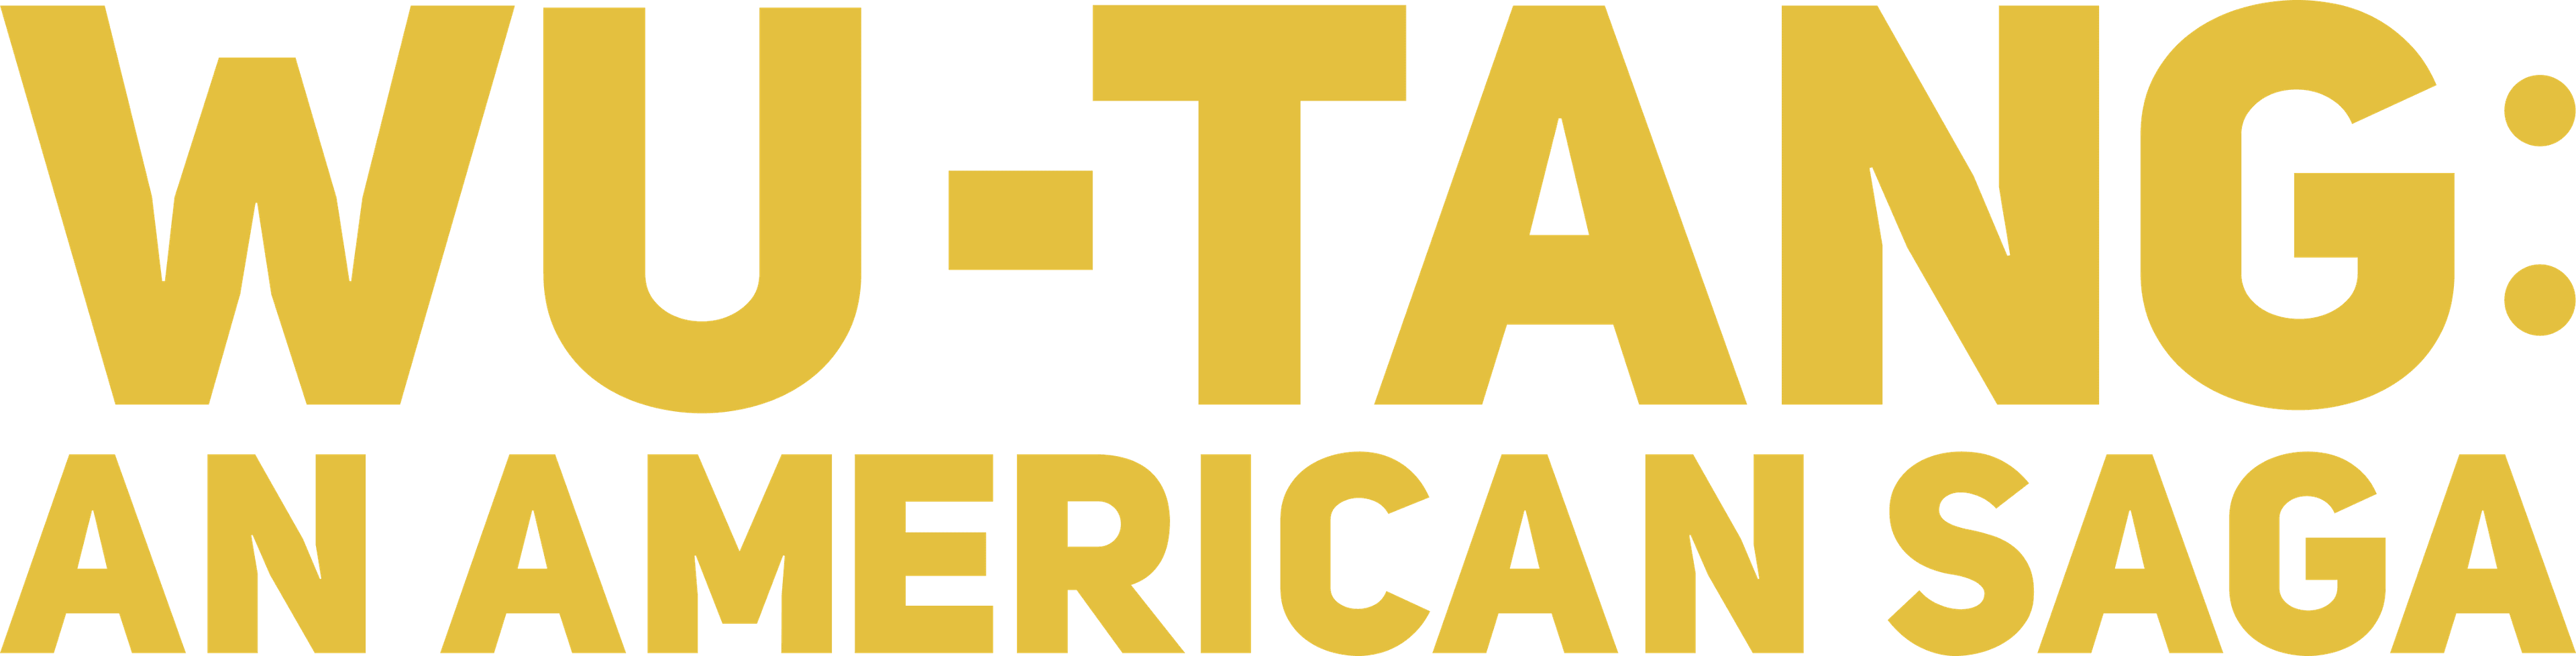 Wu-Tang: An American Saga logo